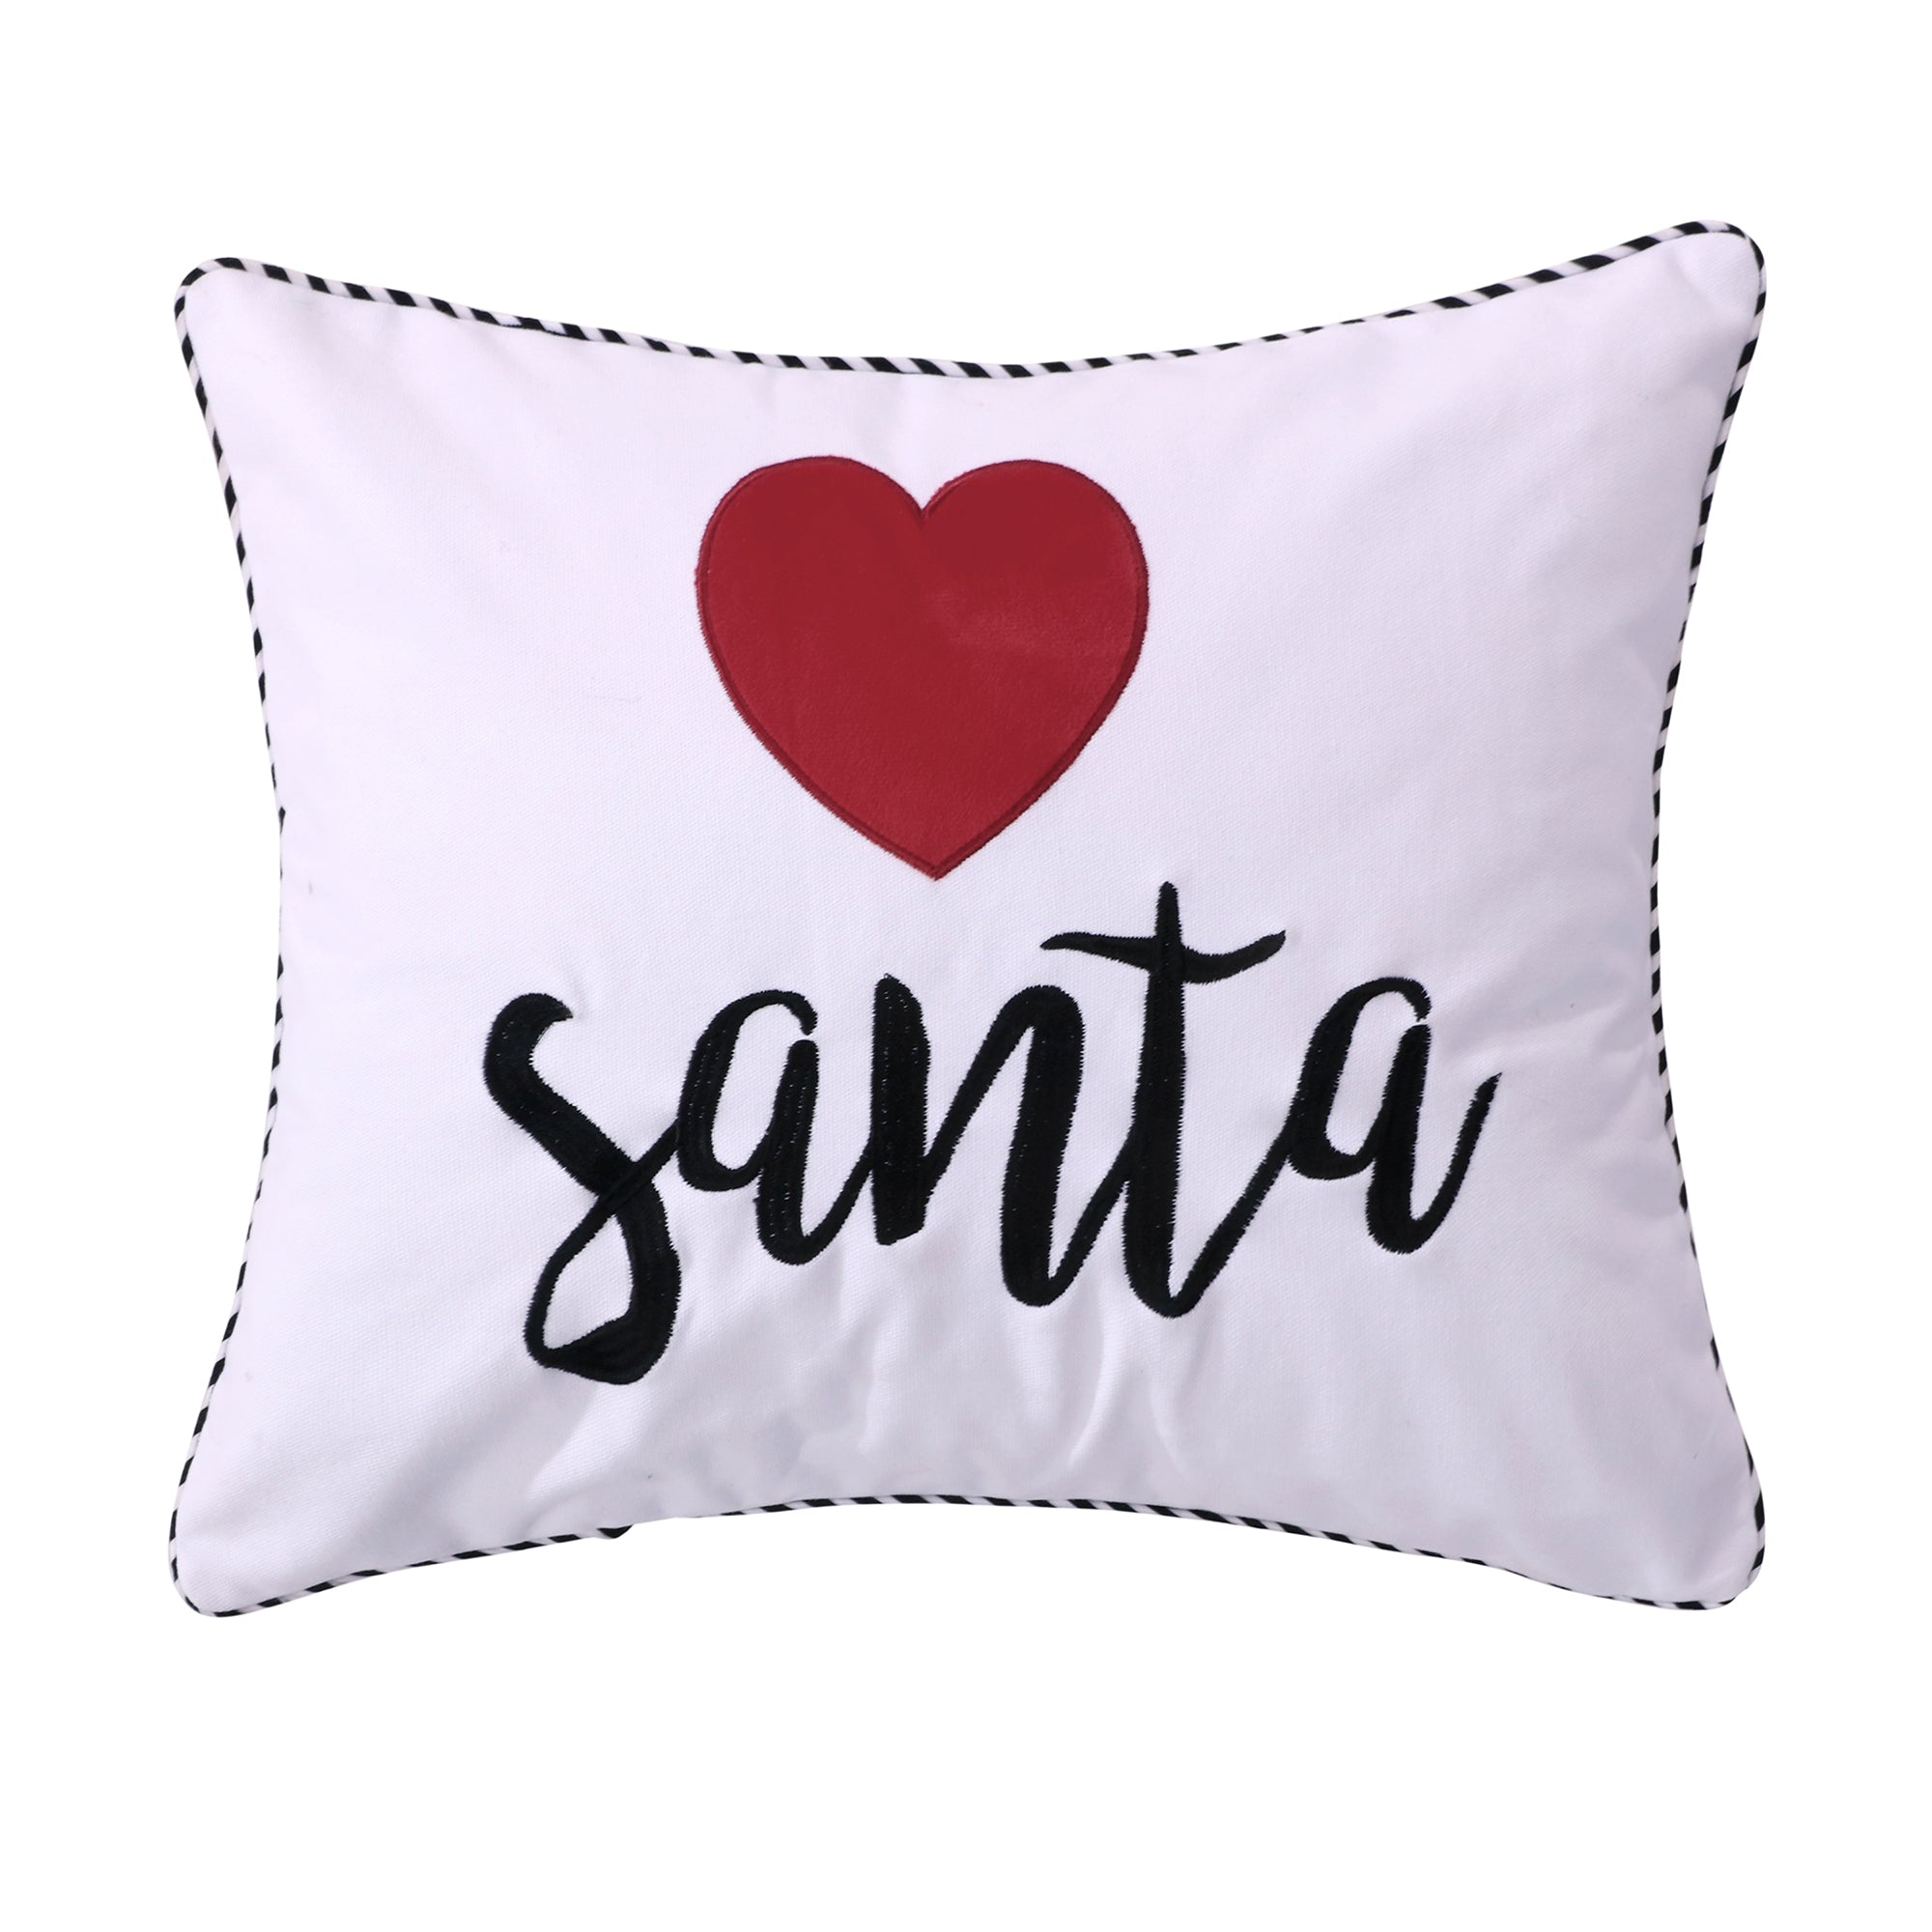 Rudolph Heart Santa Pillow